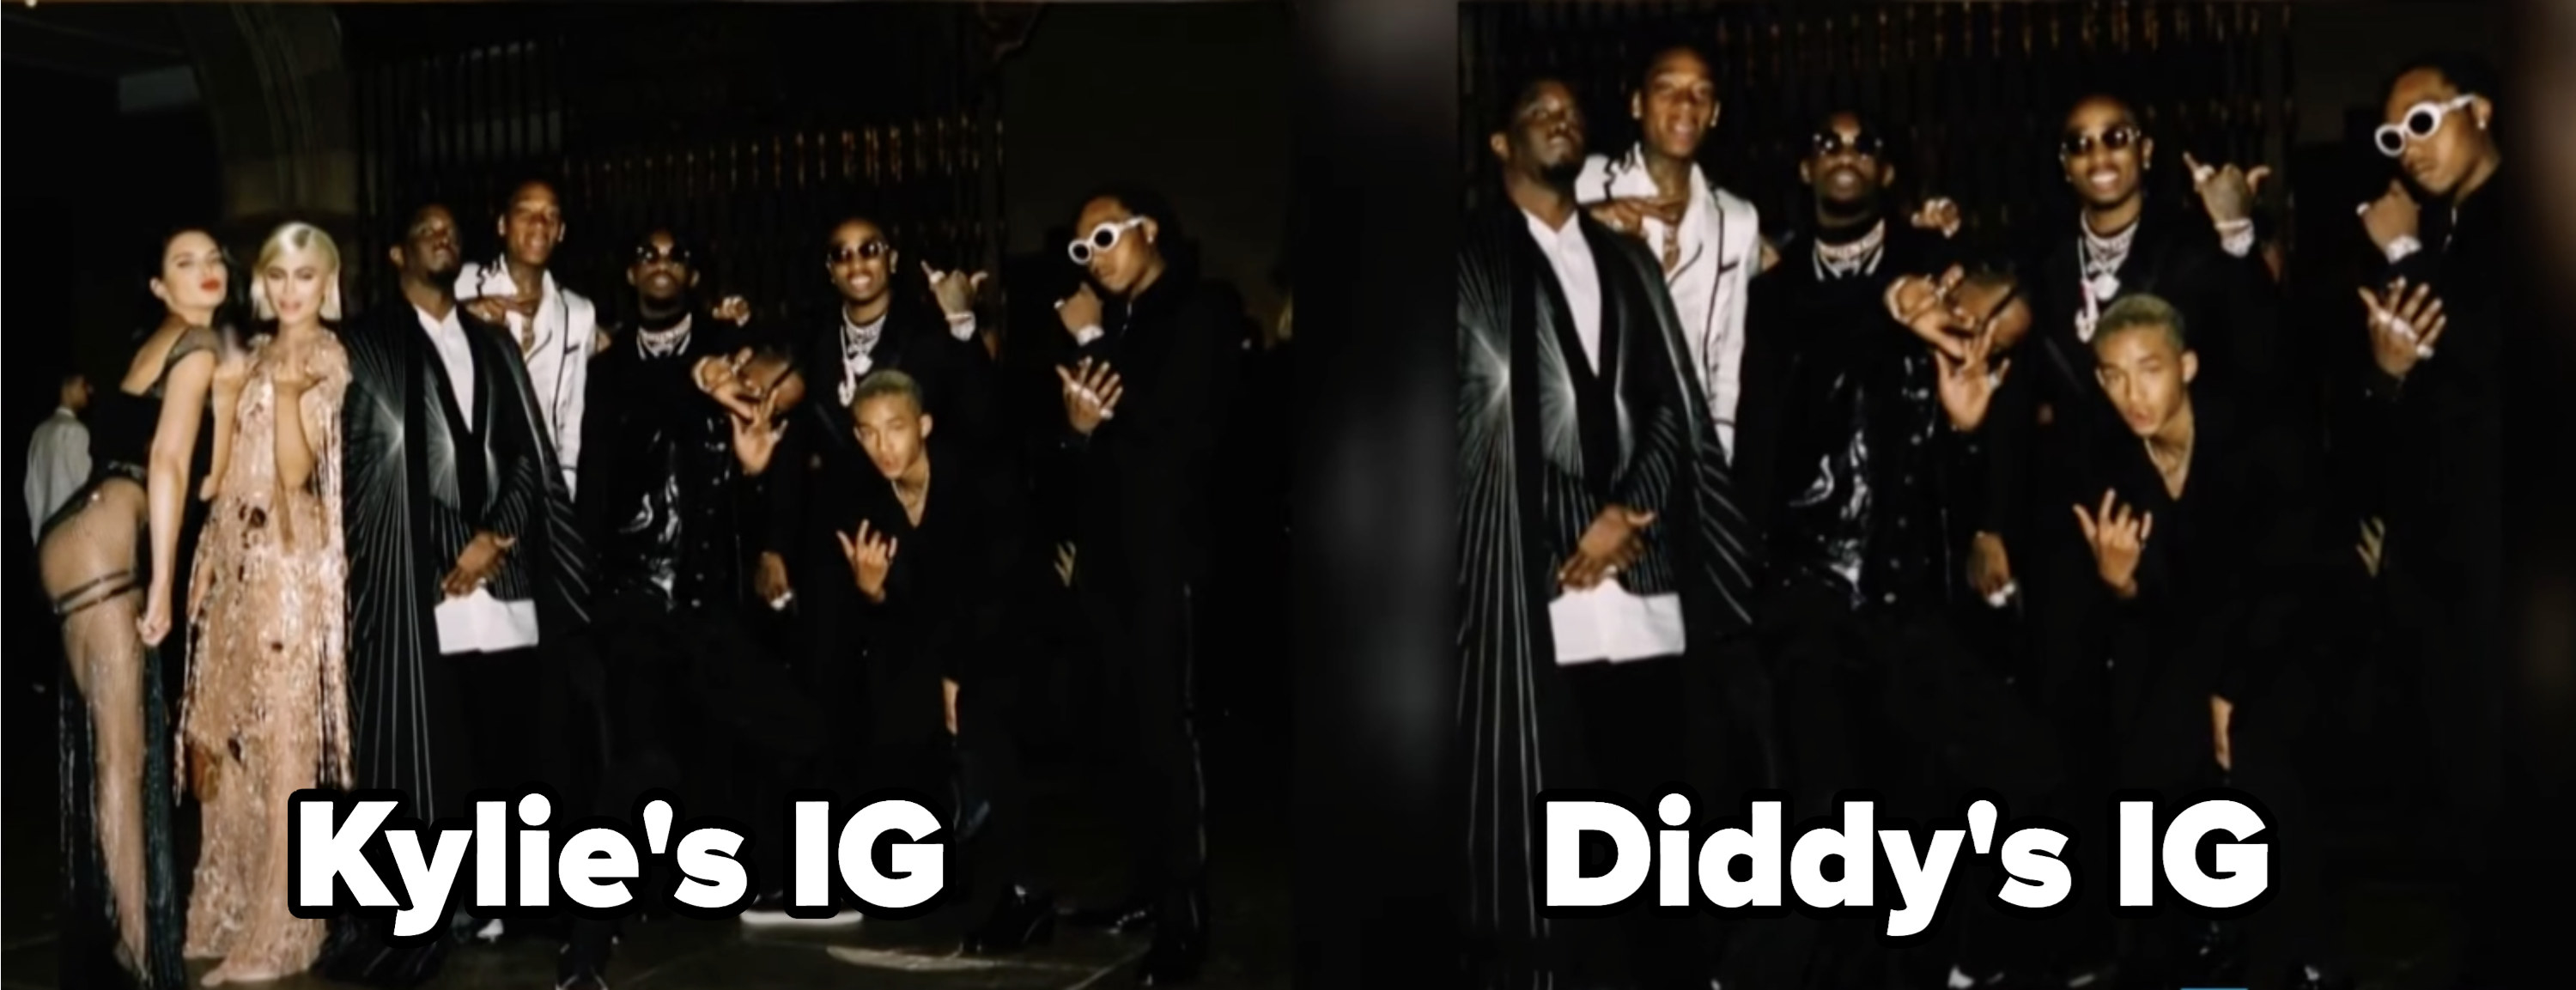 Comparison of Kylie Jenner&#x27;s IG Meg Gala photo vs. Diddy&#x27;s IG Met Gala photo.